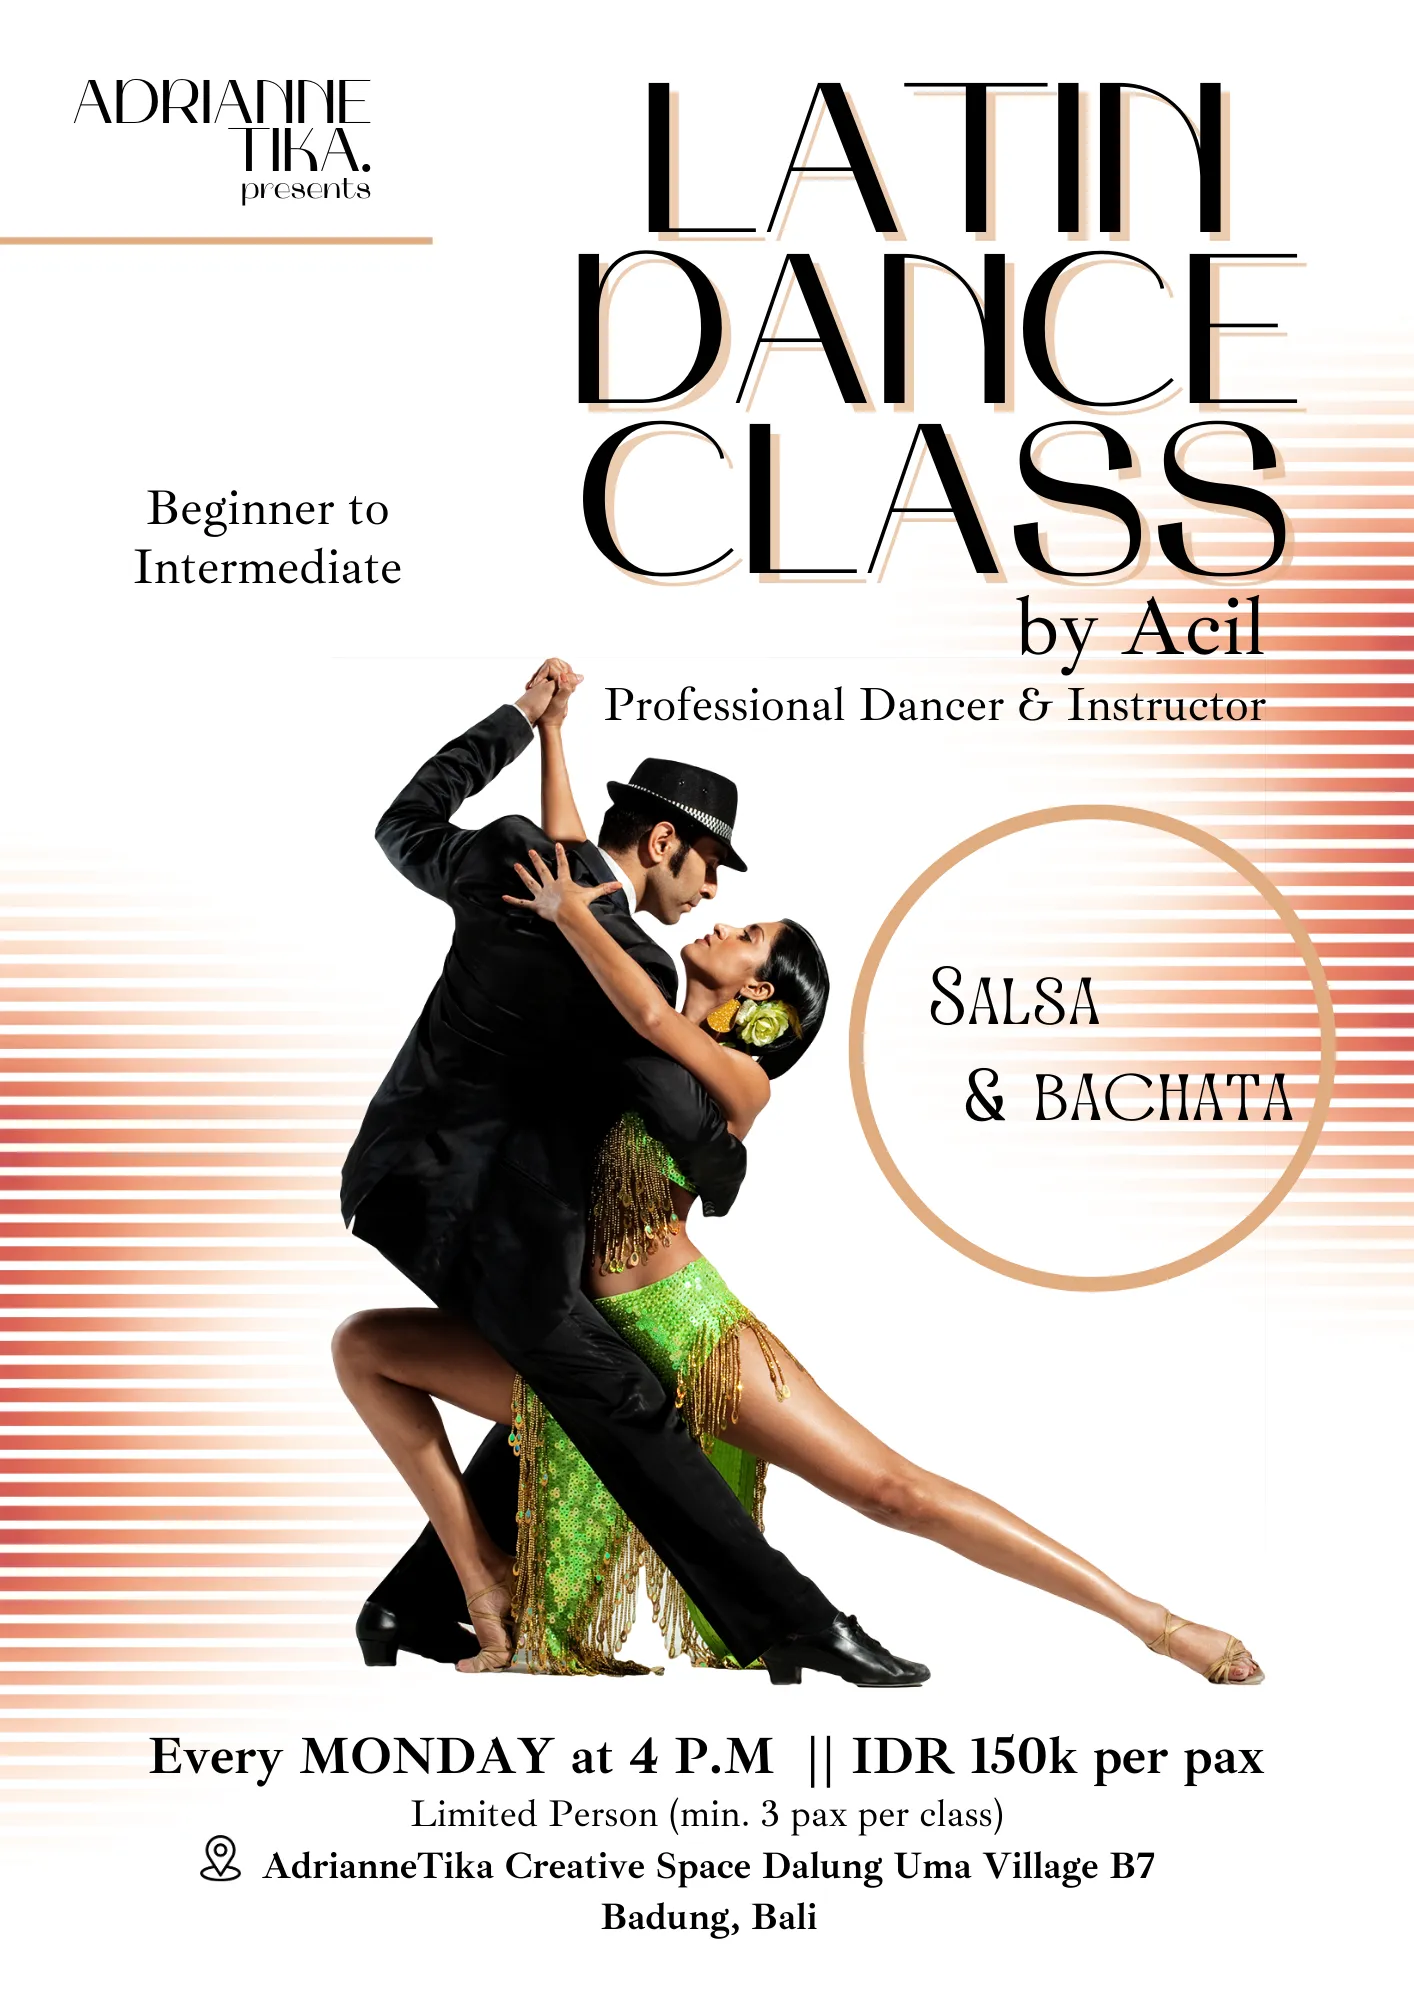 Dancing Latin Dance Class 144